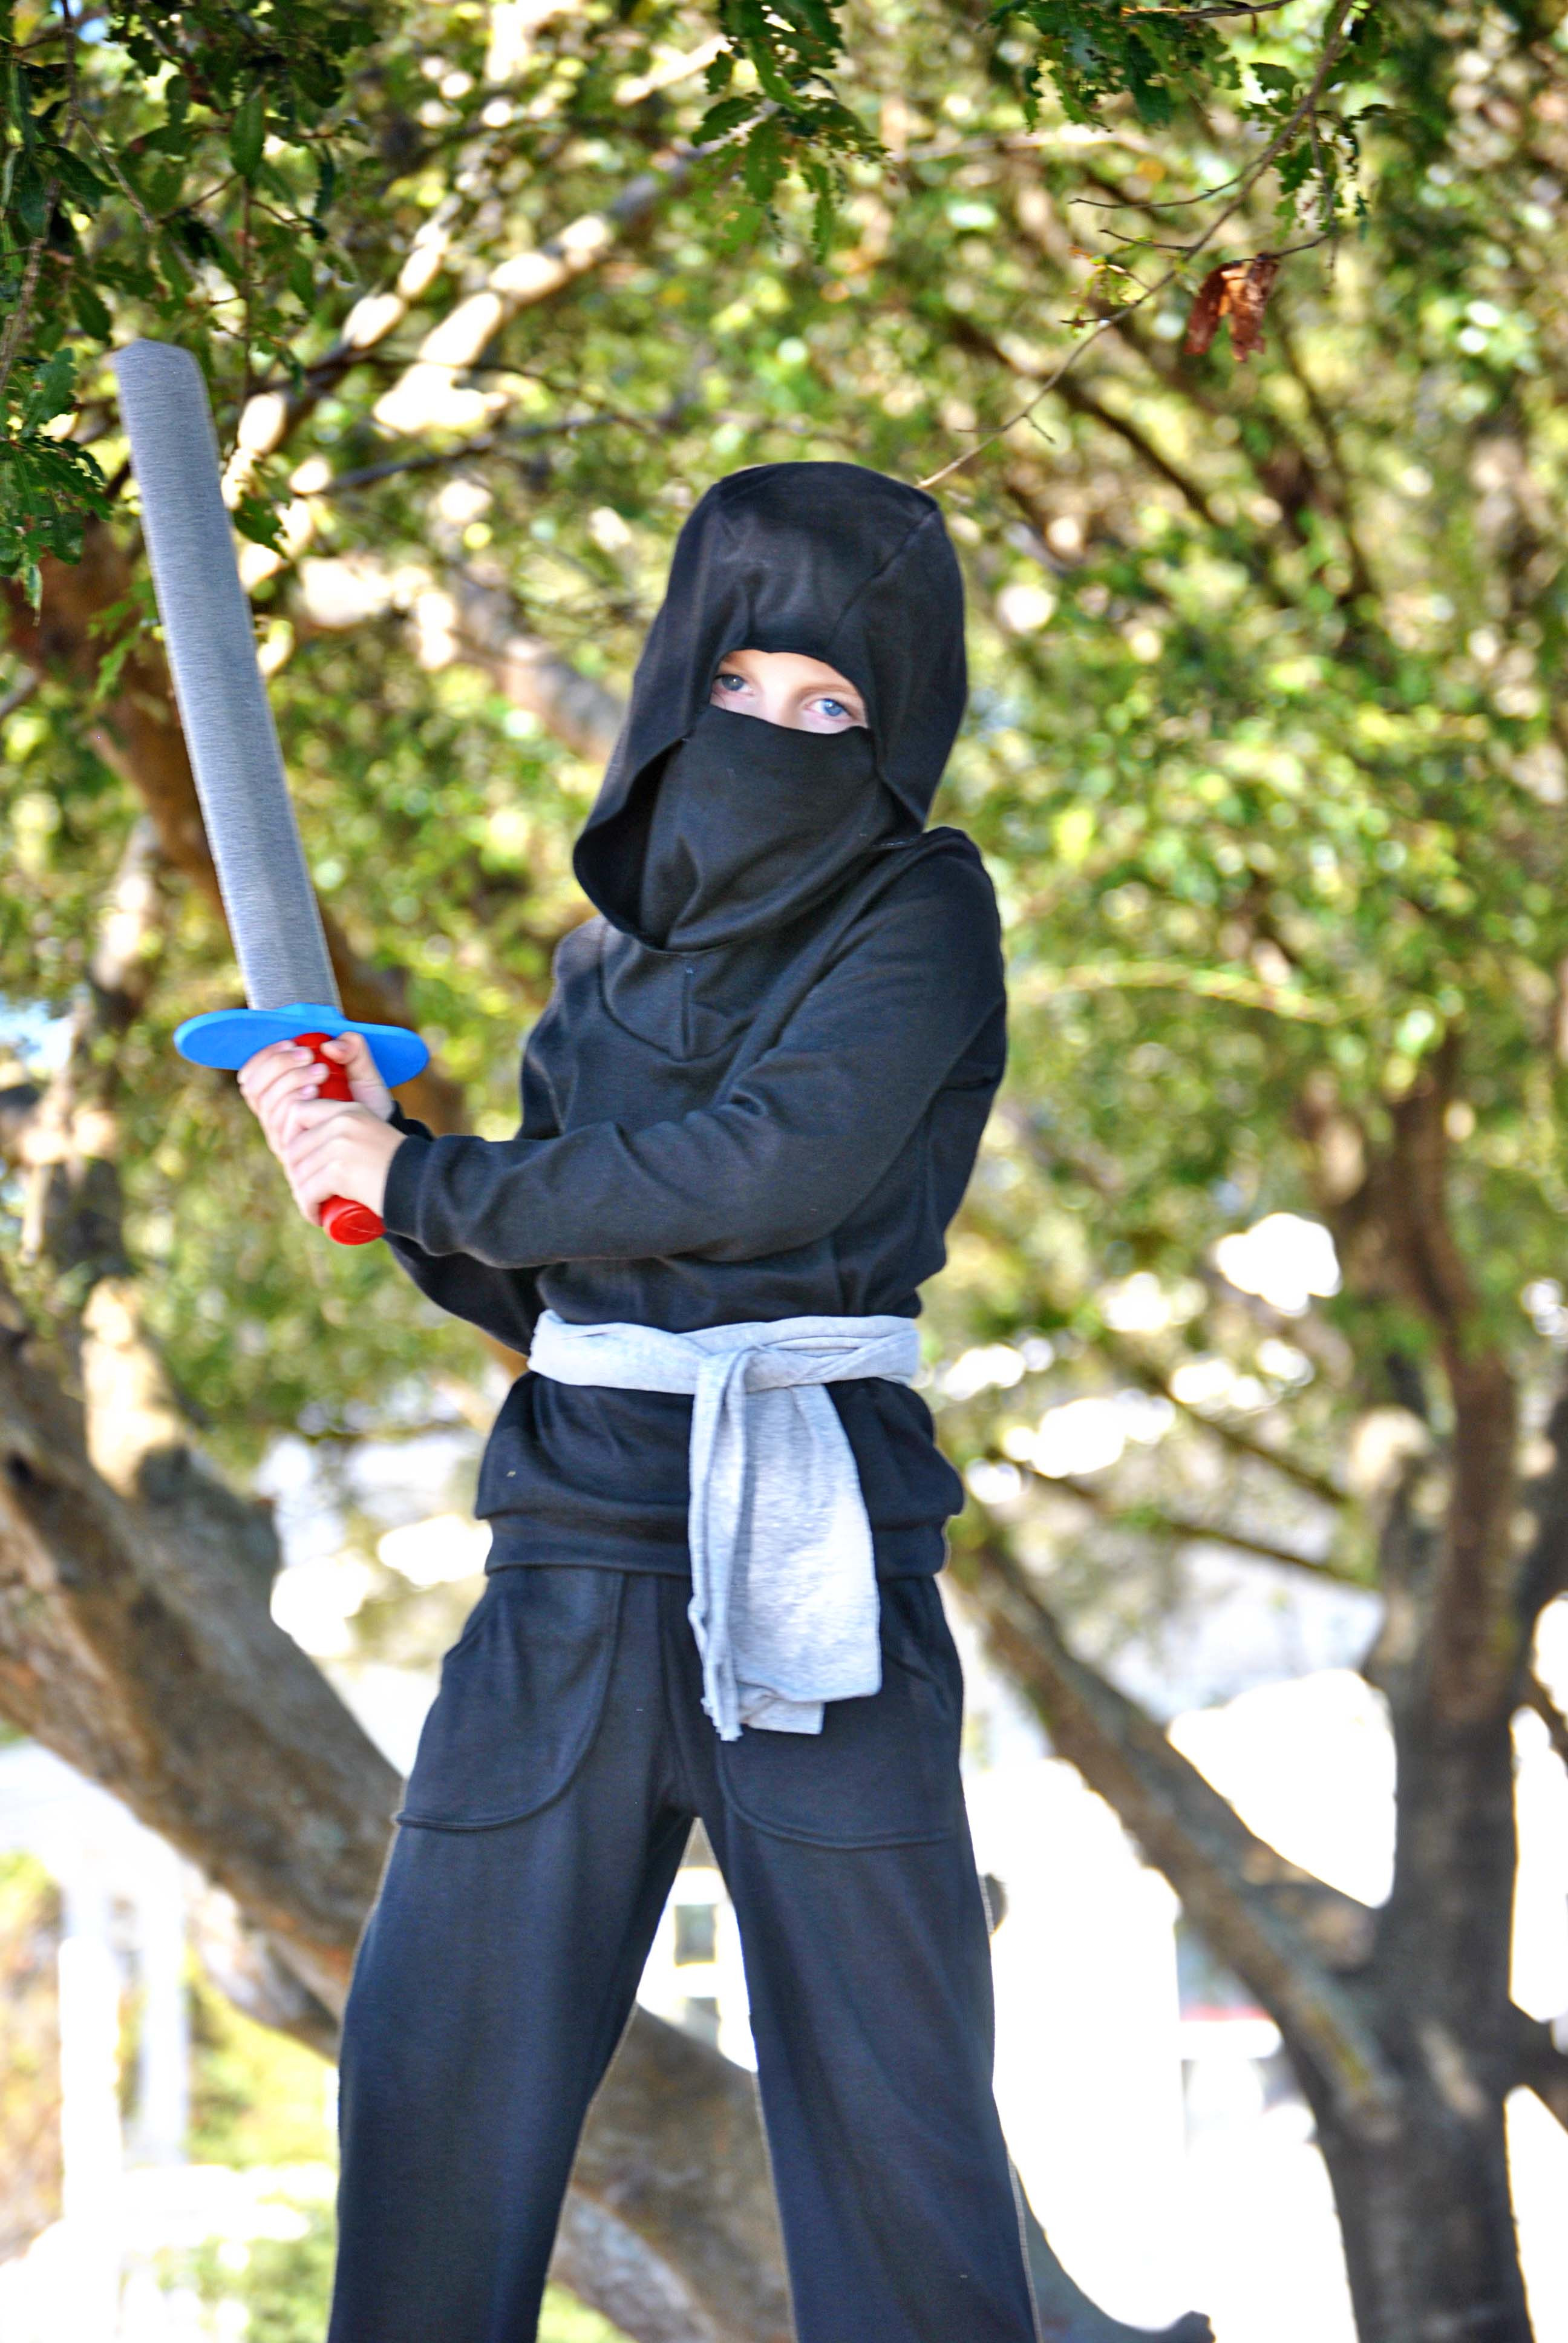 Best ideas about Ninja DIY Costume
. Save or Pin Ninja Costume Dandelion Drift Now.